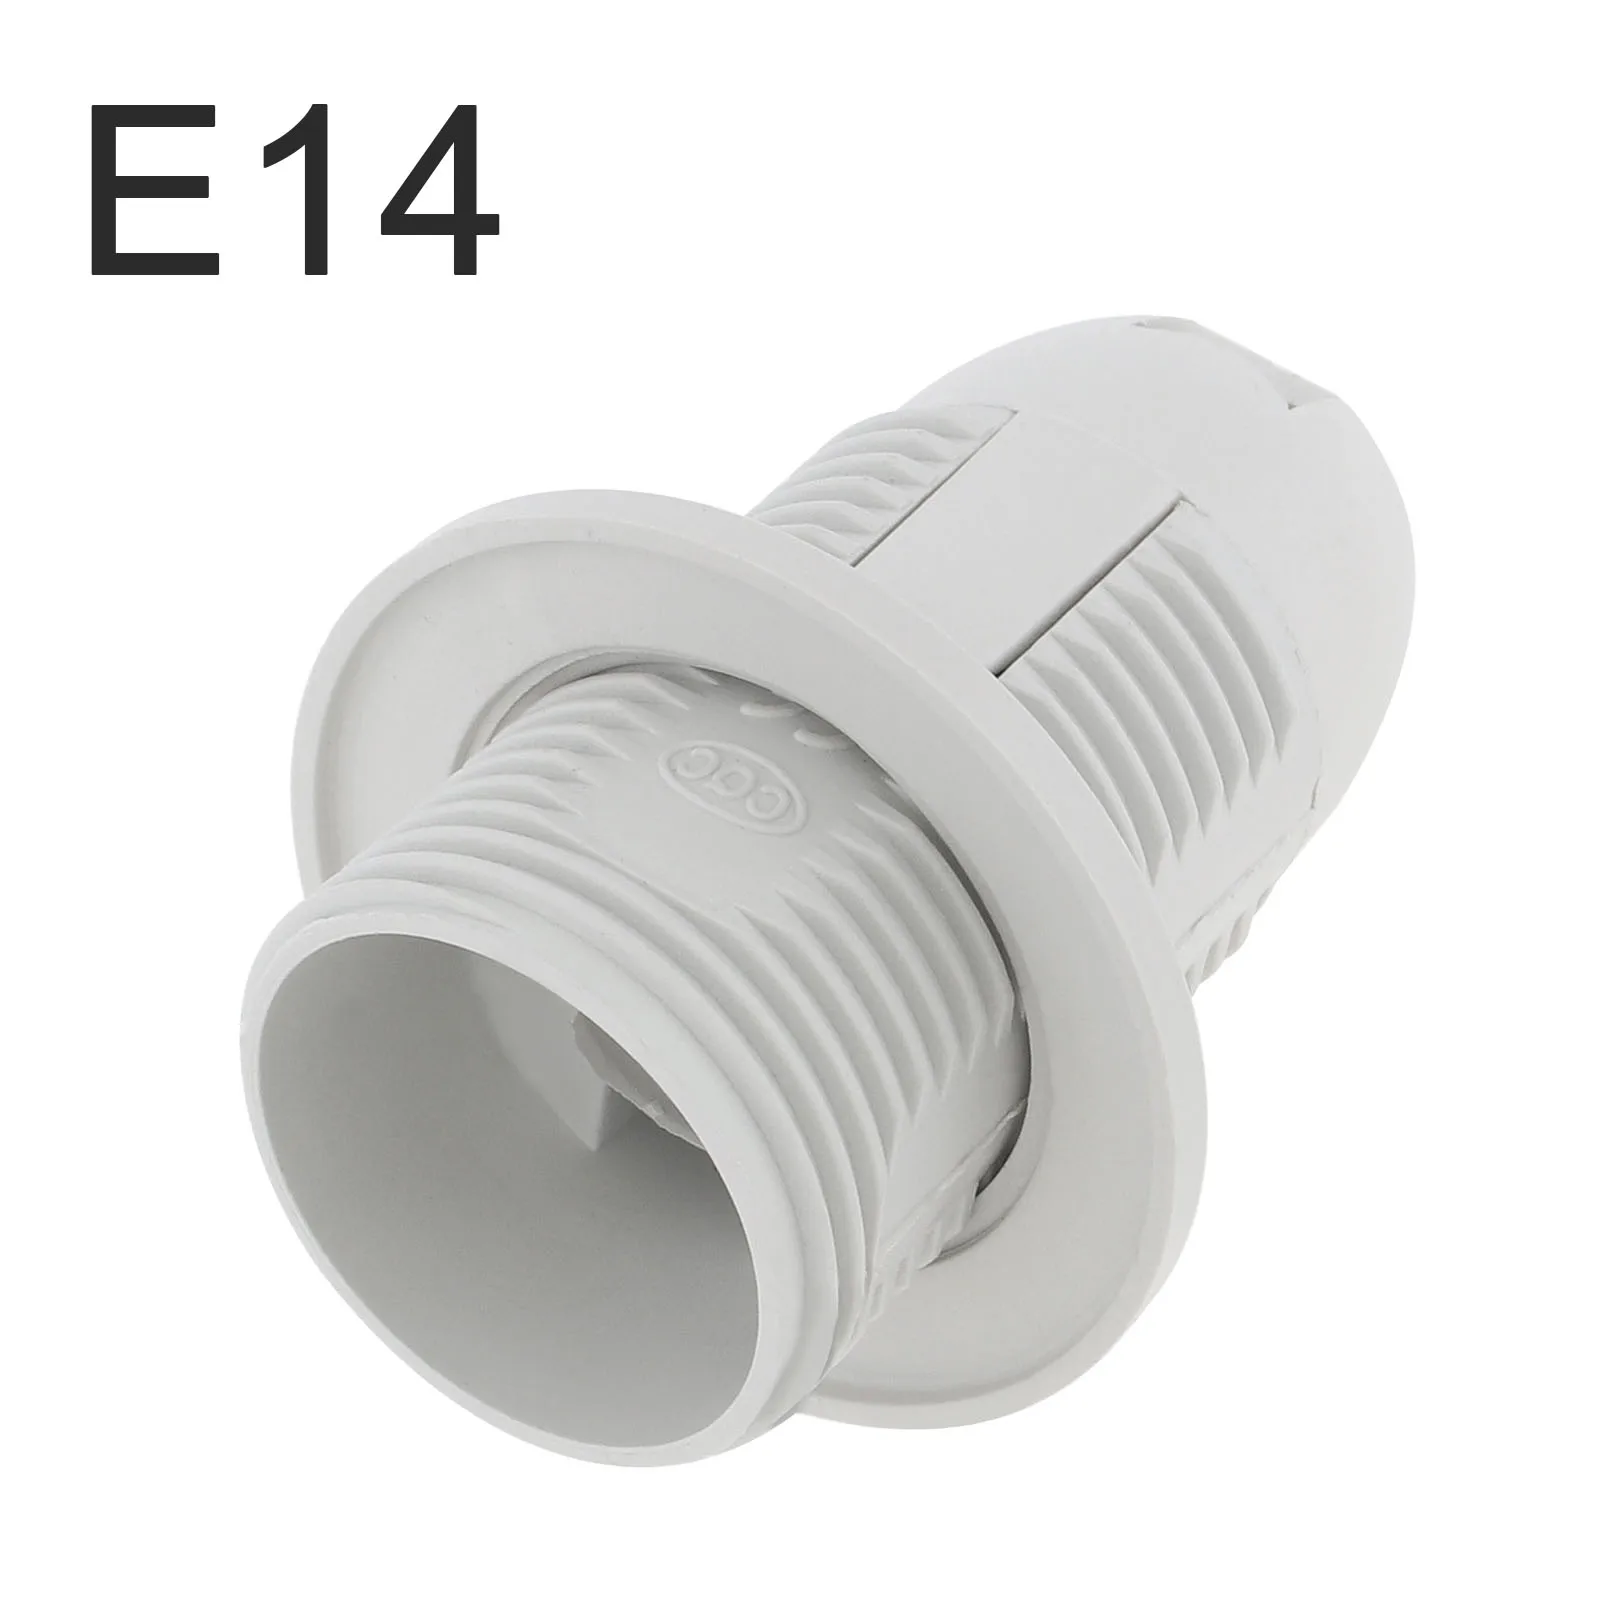 E14 Lamp Holder Edison Screw Lamp Holder Base Insulating Plastic Shell Light Bulb Socket 120pcs m8 m8 11 2 m8x11x2 clear nylon plastic plain gasket transparent insulating flat washer